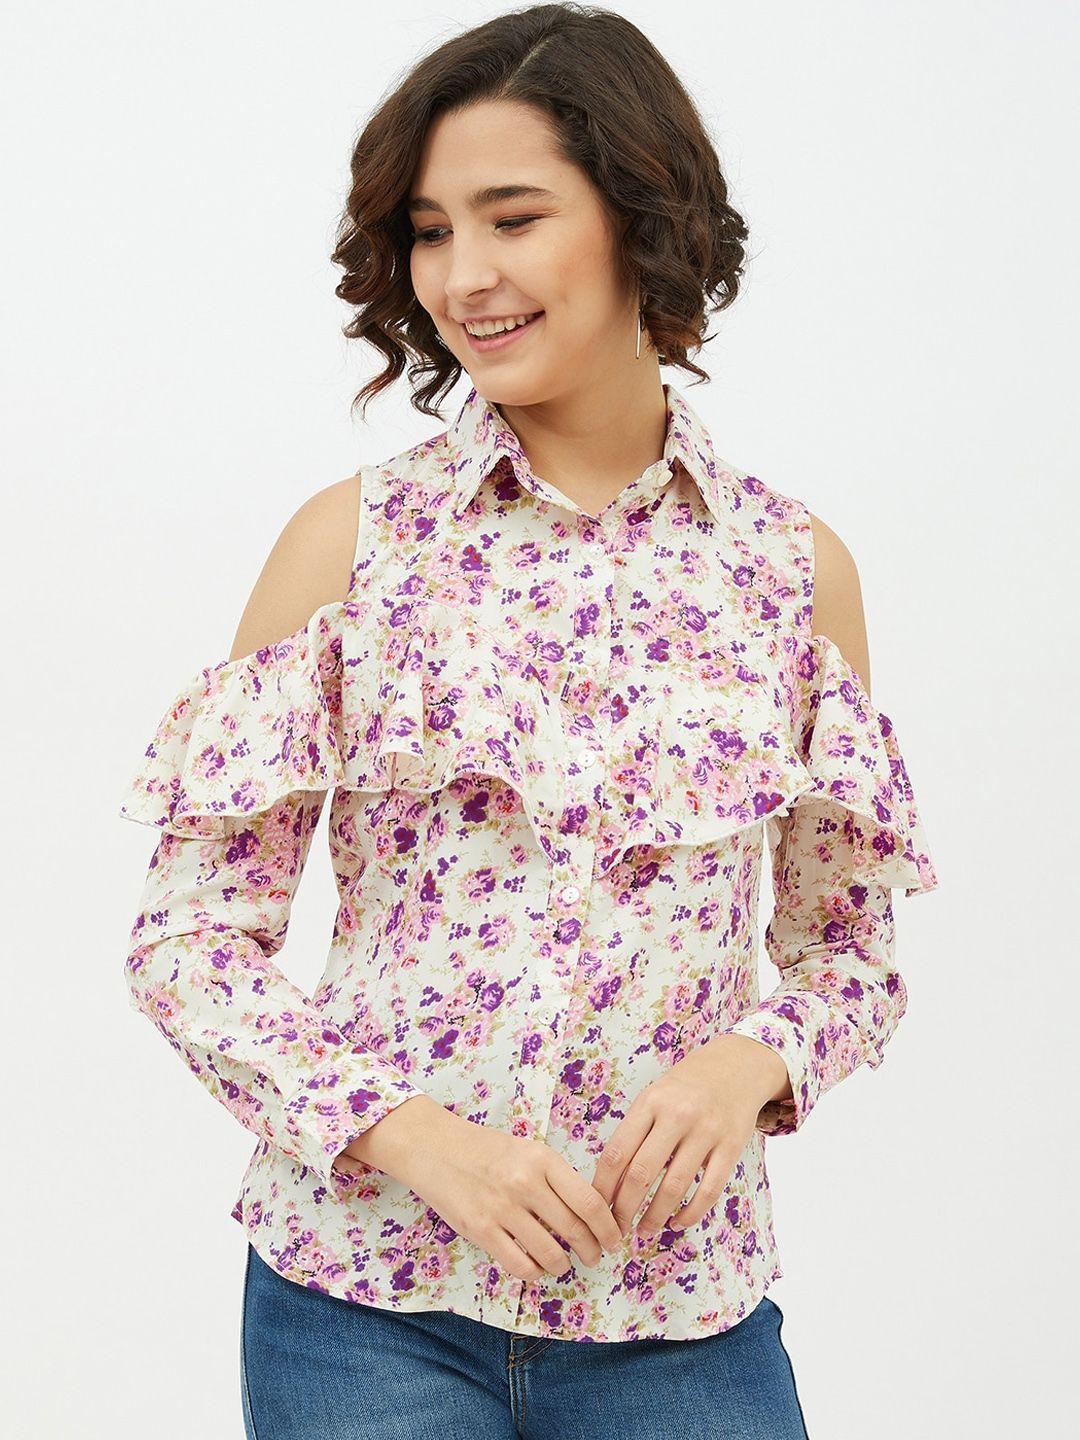 stylestone women off-white & purple comfort regular fit printed casual shirt